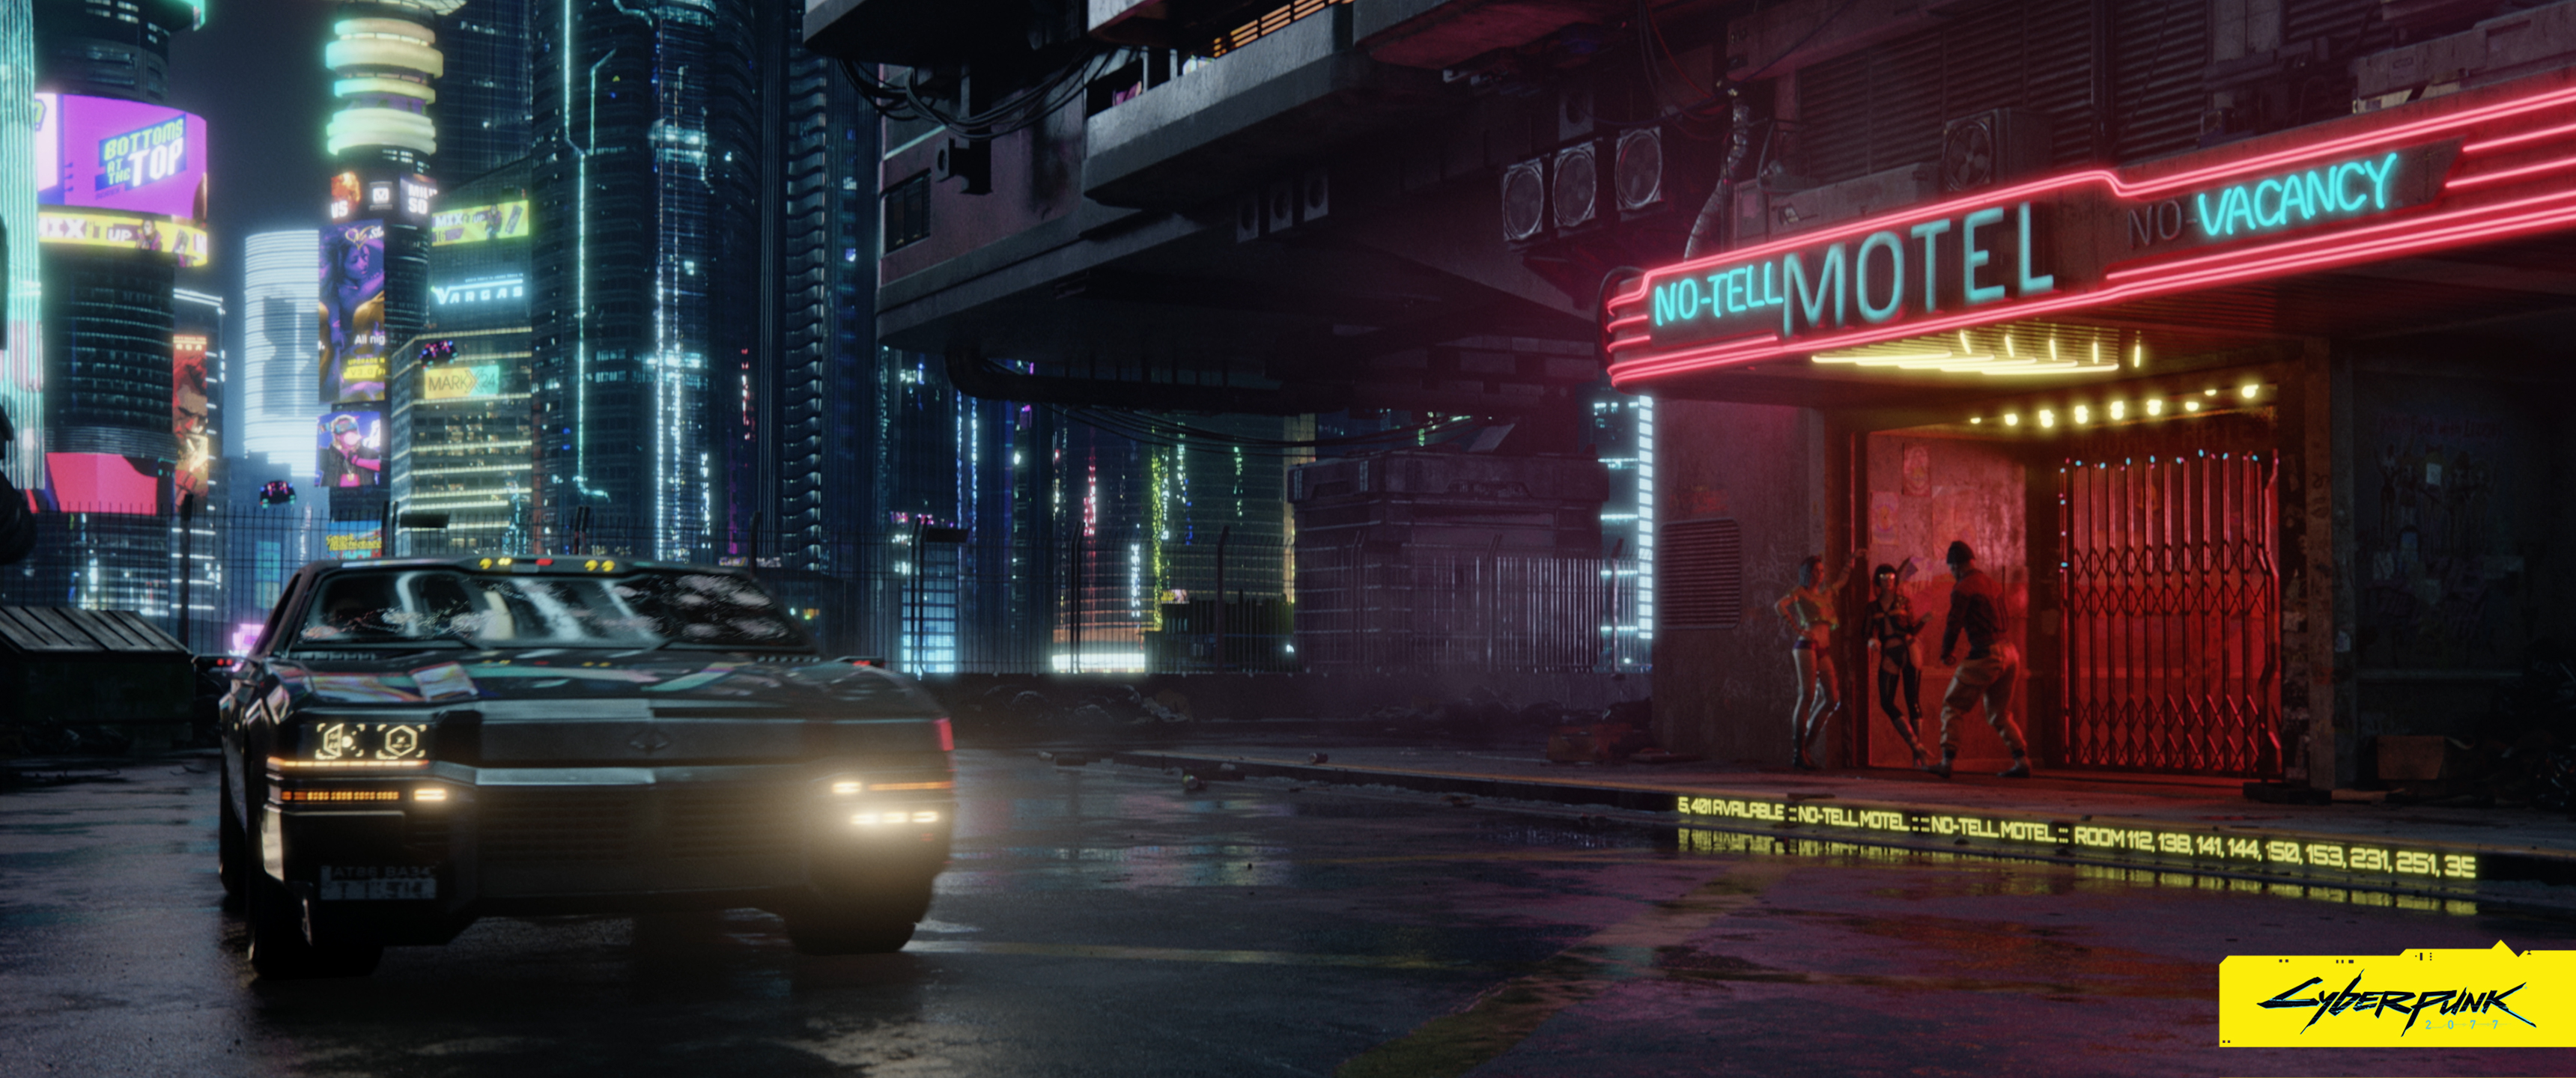 General 3440x1440 Cyberpunk 2077 video games science fiction futuristic city car vehicle video game art Villefort Cortes